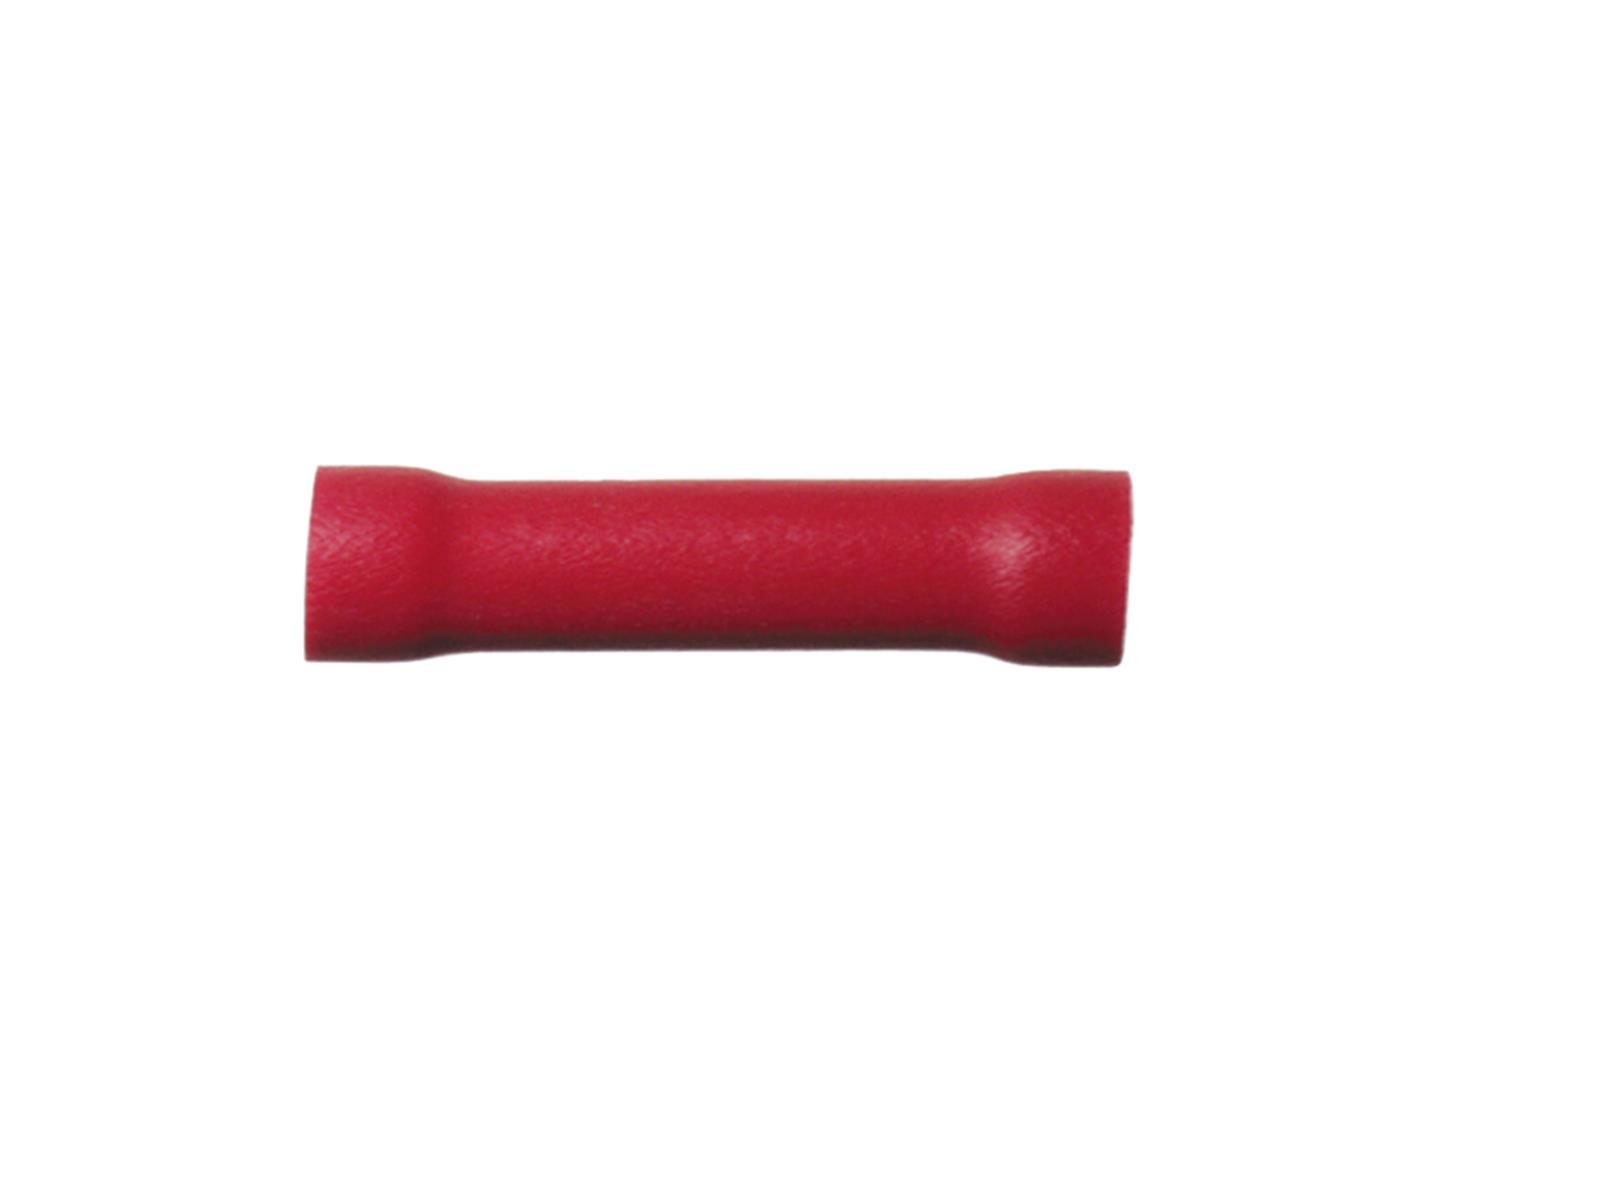 ACV Stoßverbinder rot 0.5 - 1.0 mm² (100 Stück) - 340001